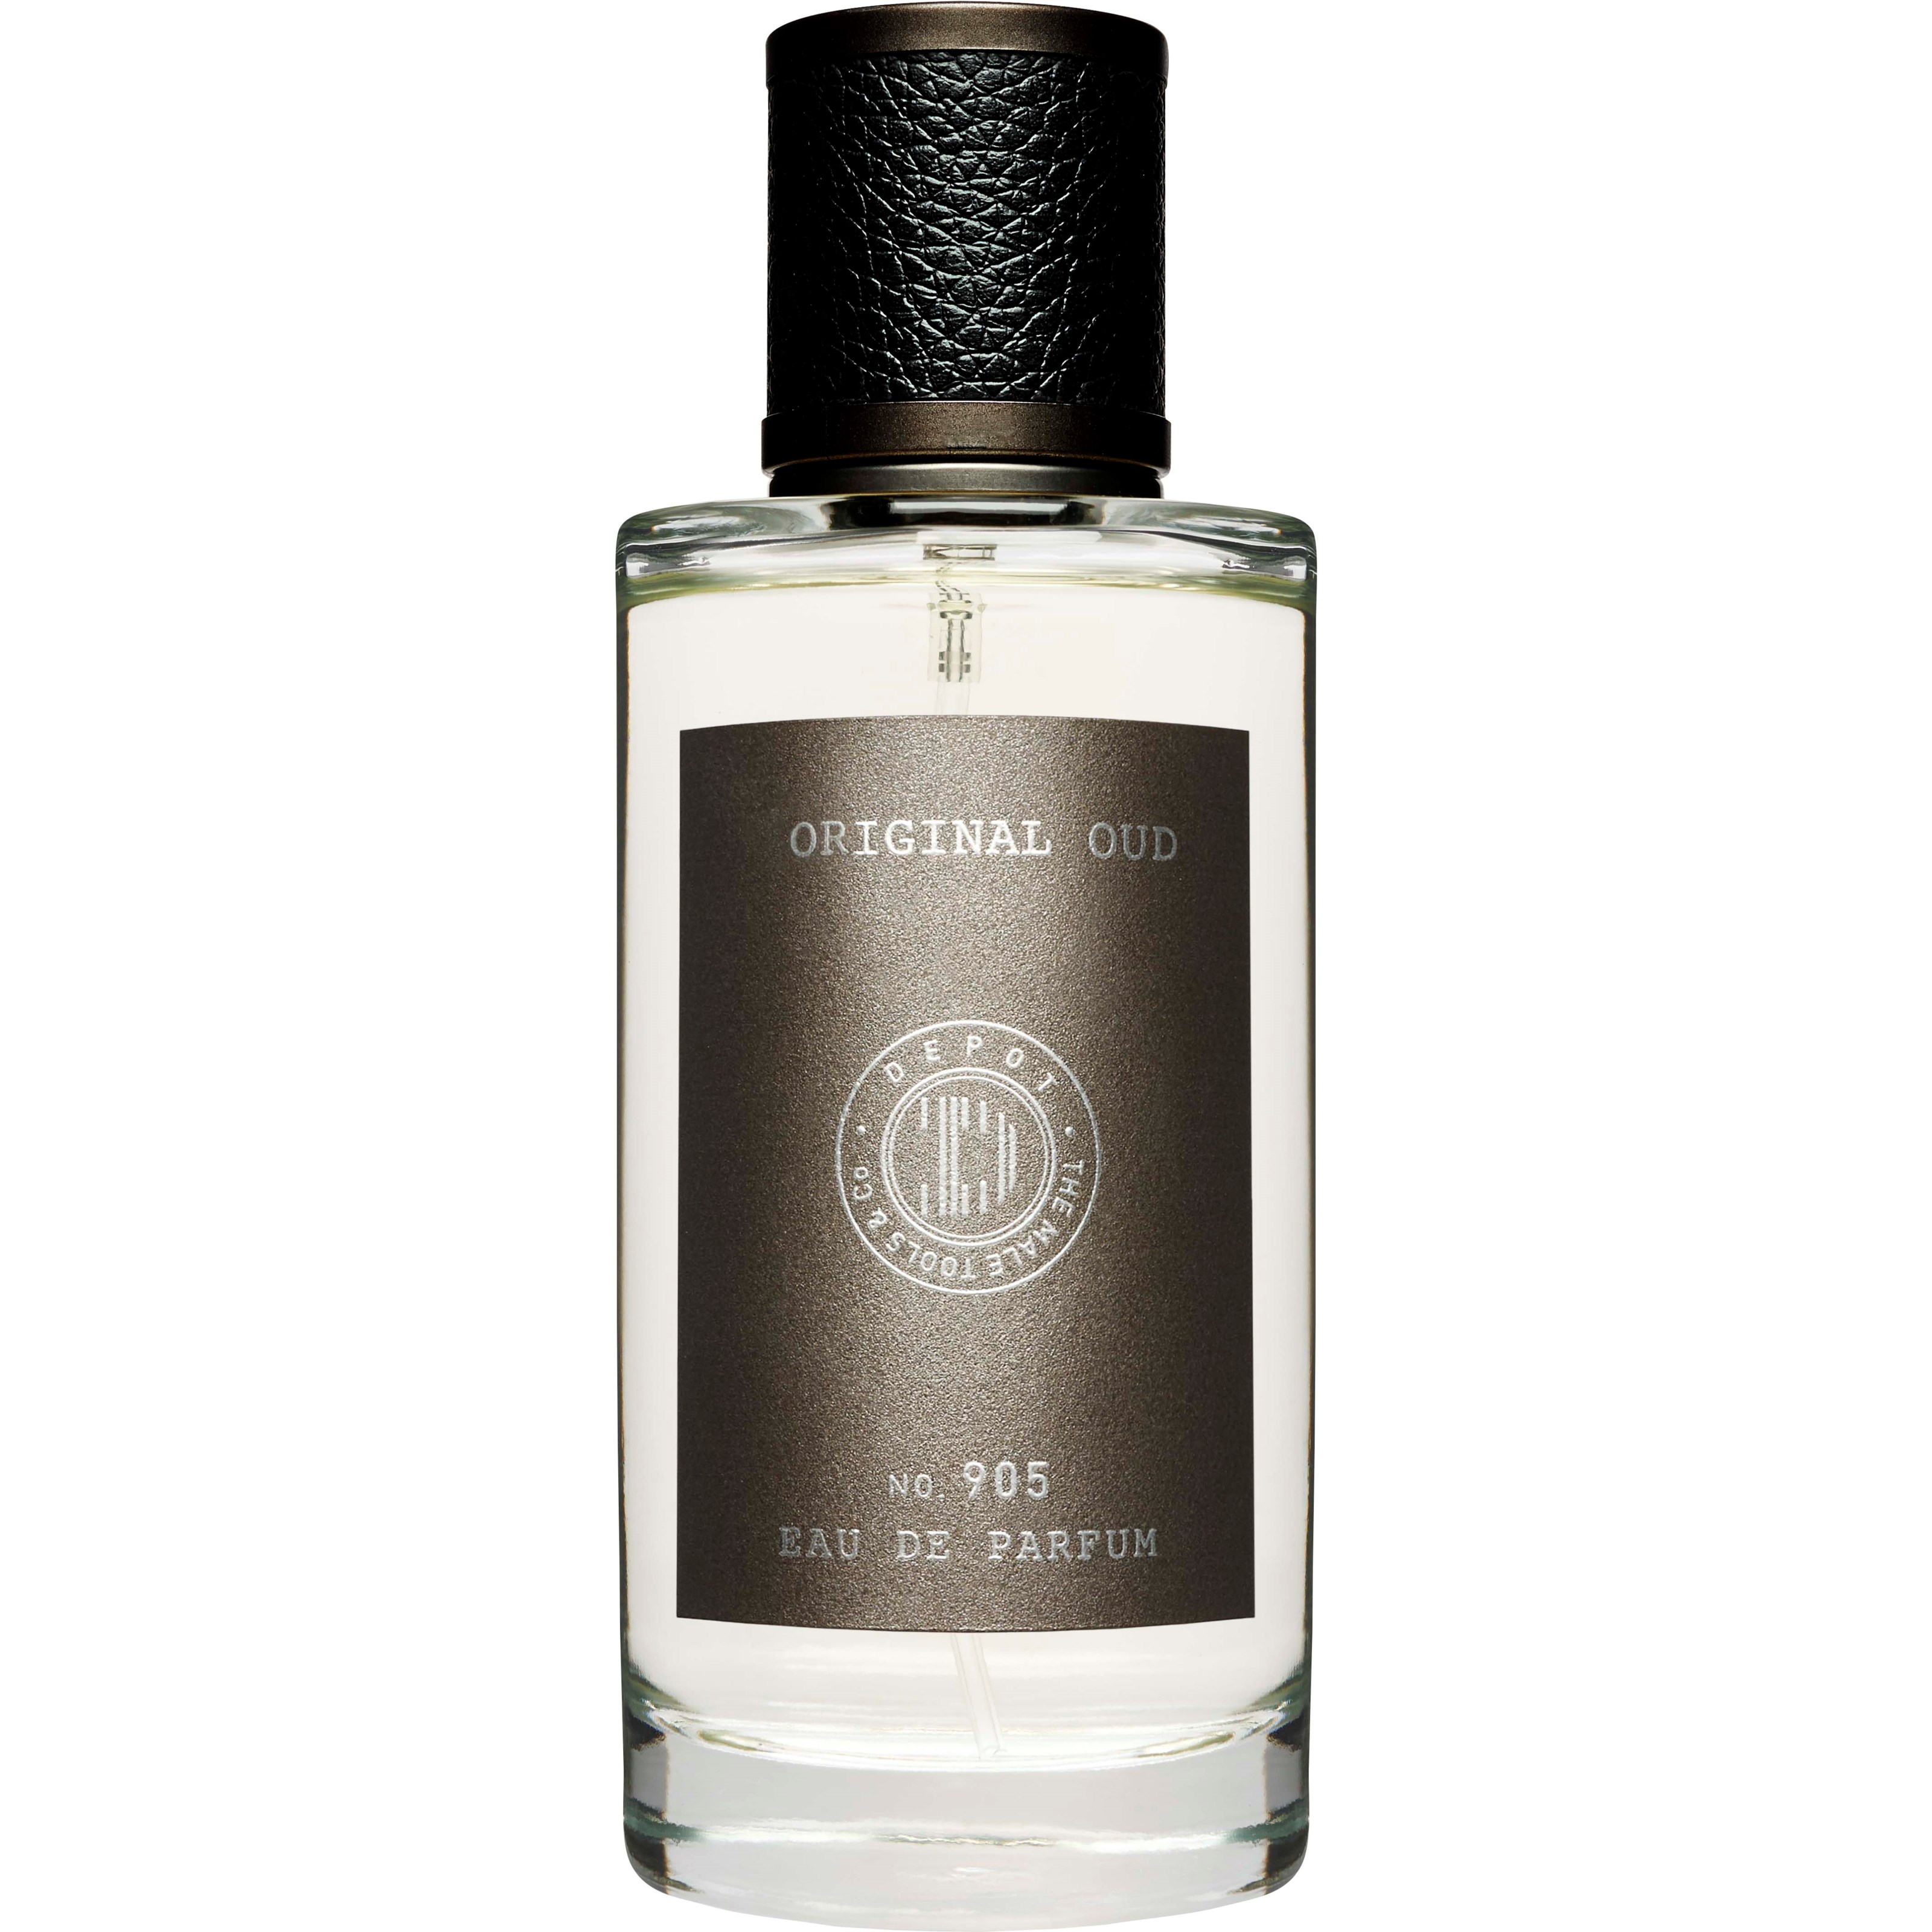 DEPOT MALE TOOLS No. 905 Eau De Parfum Original Oud 100 ml